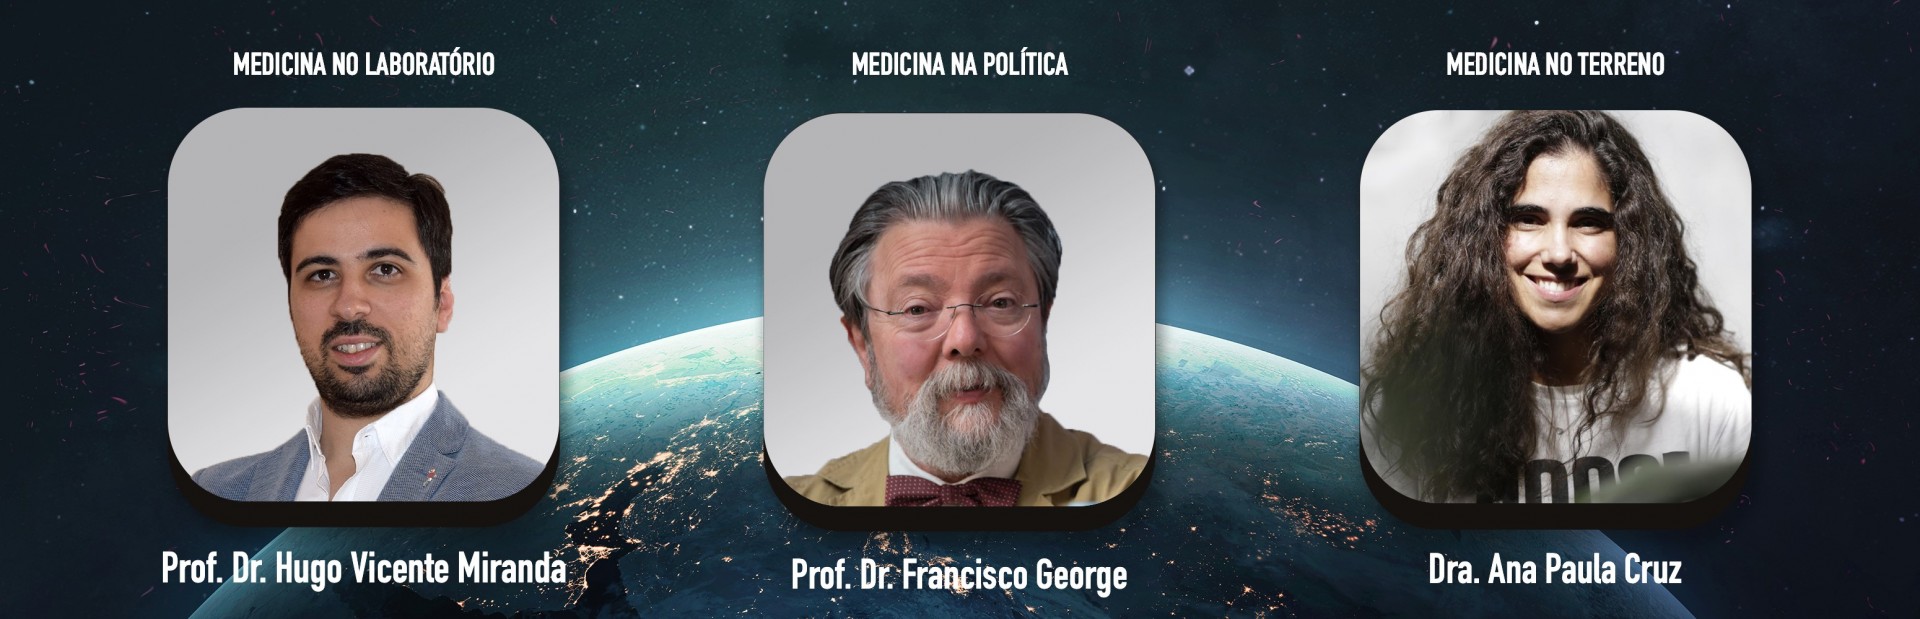 Palestrantes AIMS Masterclasses 2019: Prof. Dr. Hugo Vicente Miranda, Prof. Dr. Francisco George e Dr.ª Ana Paula Cruz